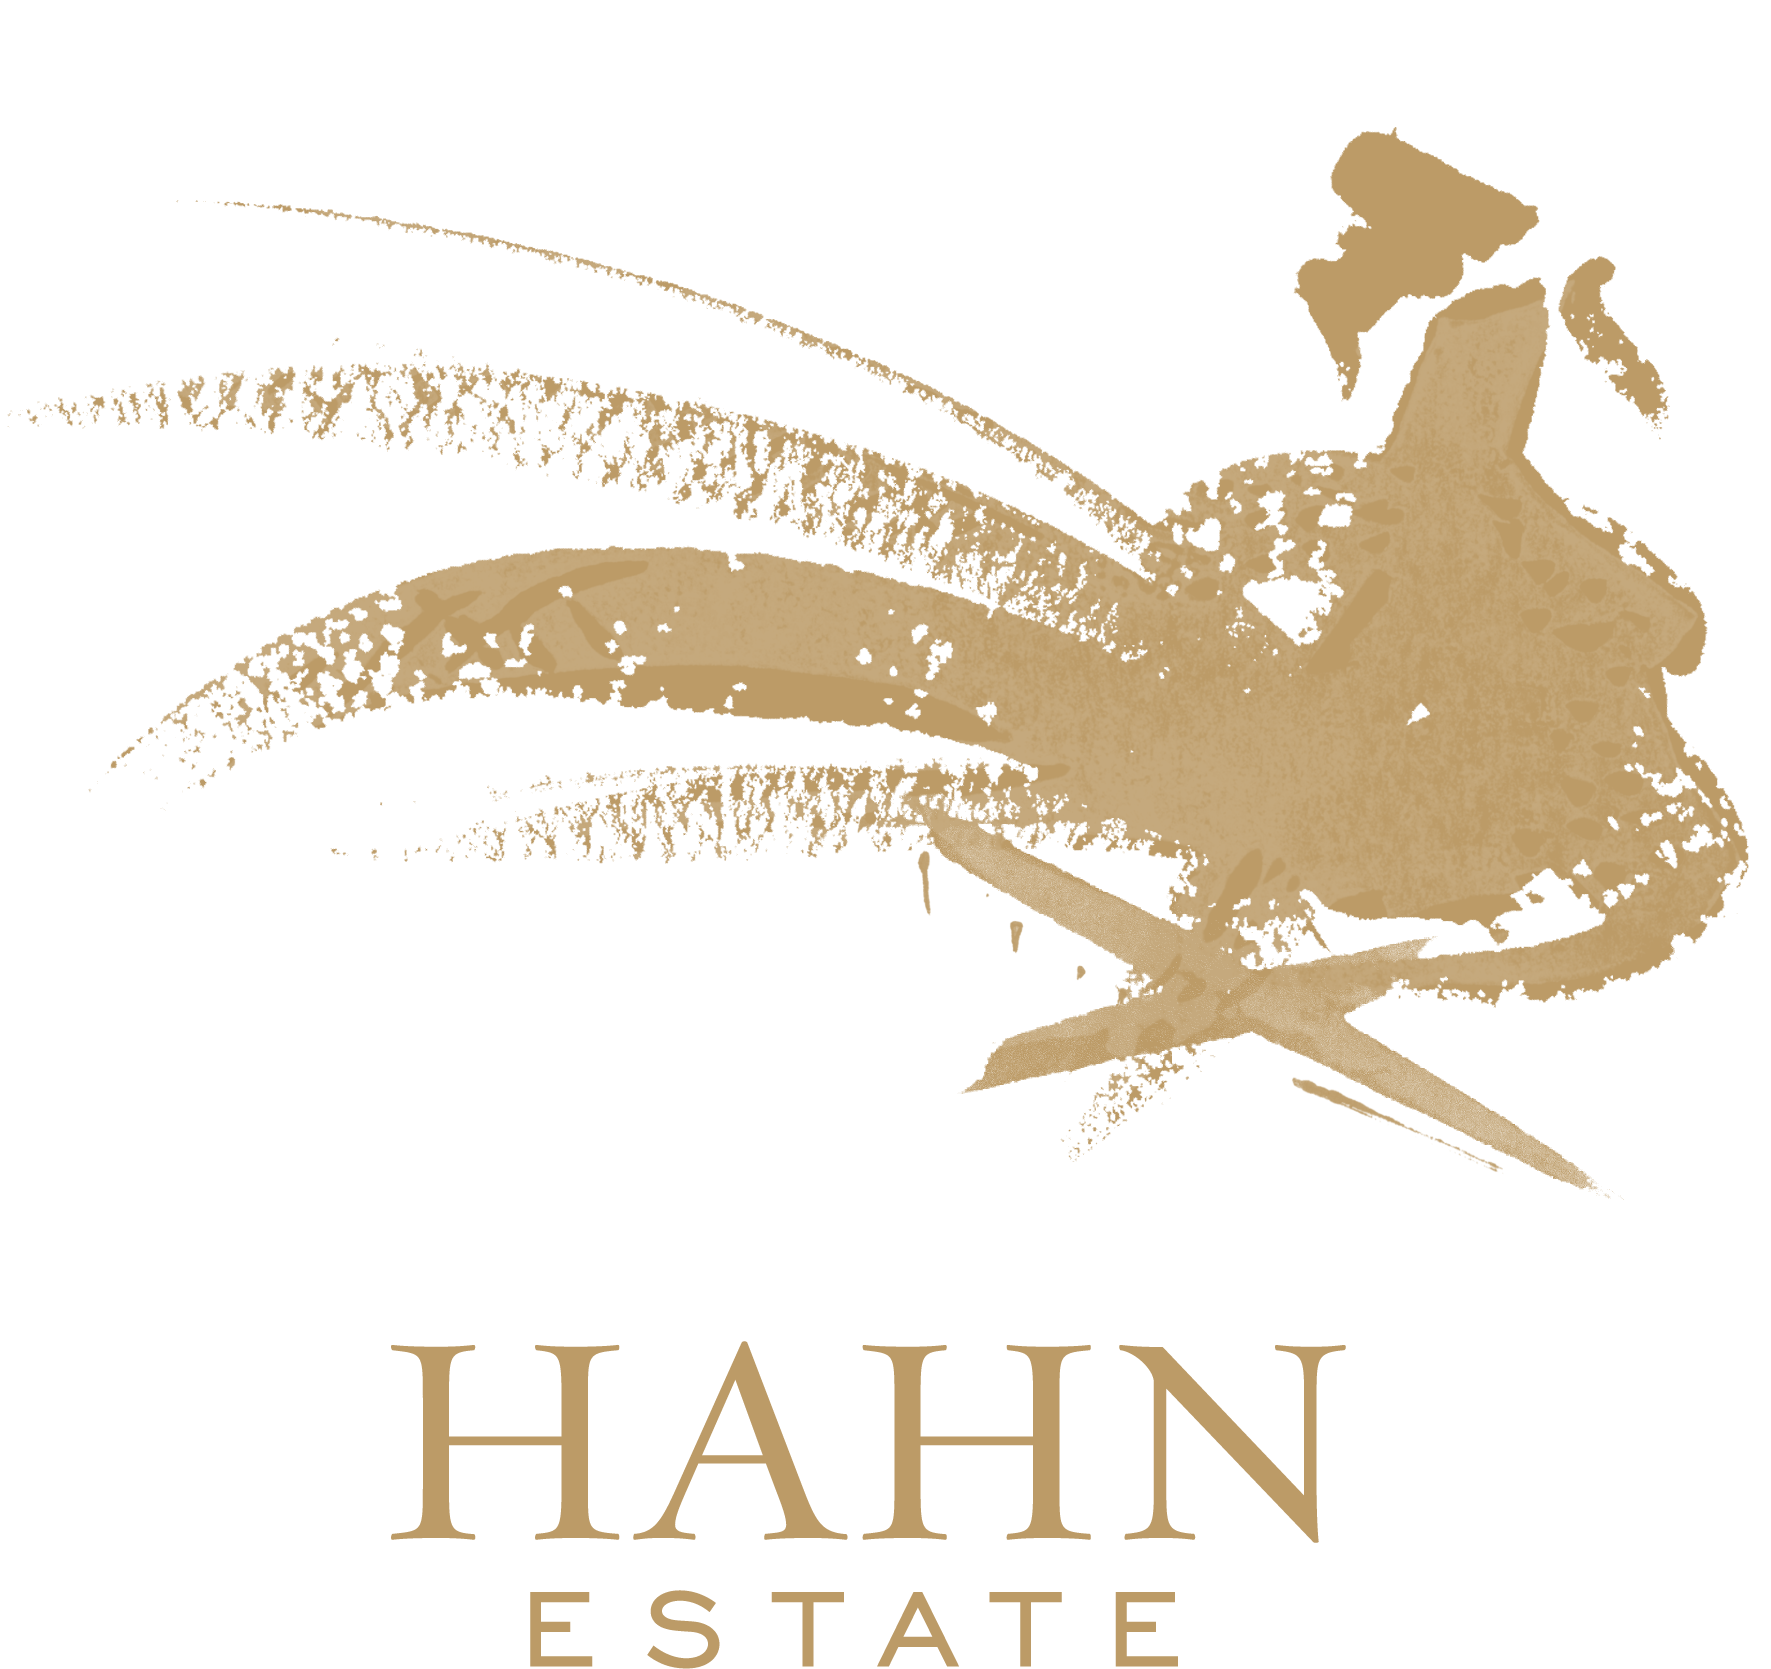 Hahn Estate